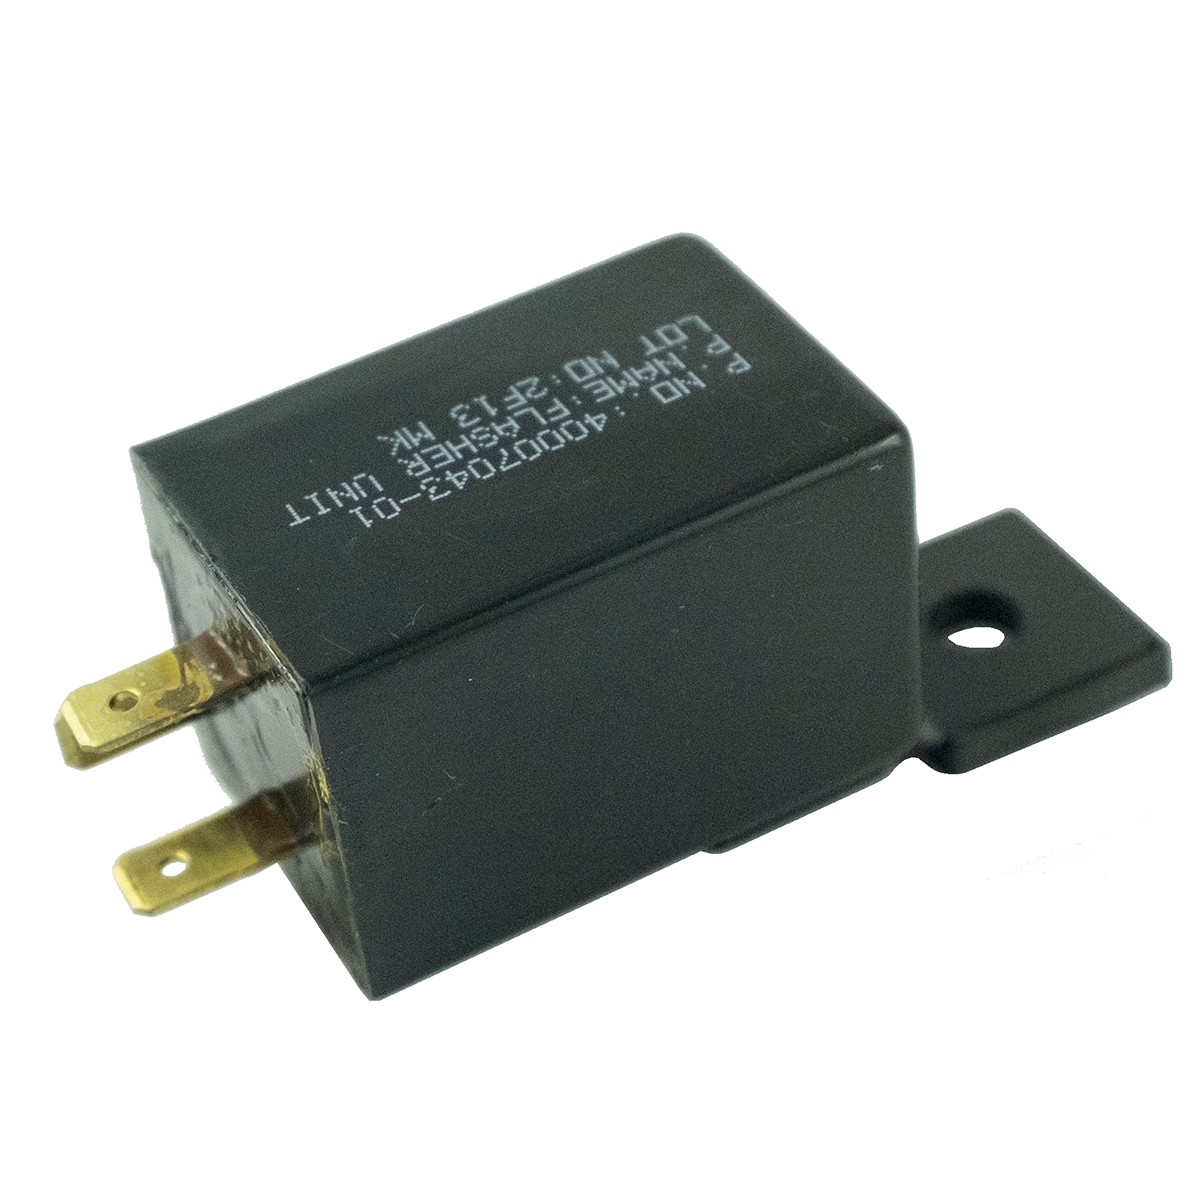 Relay, indicator module 12V/110W / LS R4041 / TRG750 / A1750251 / 40007043